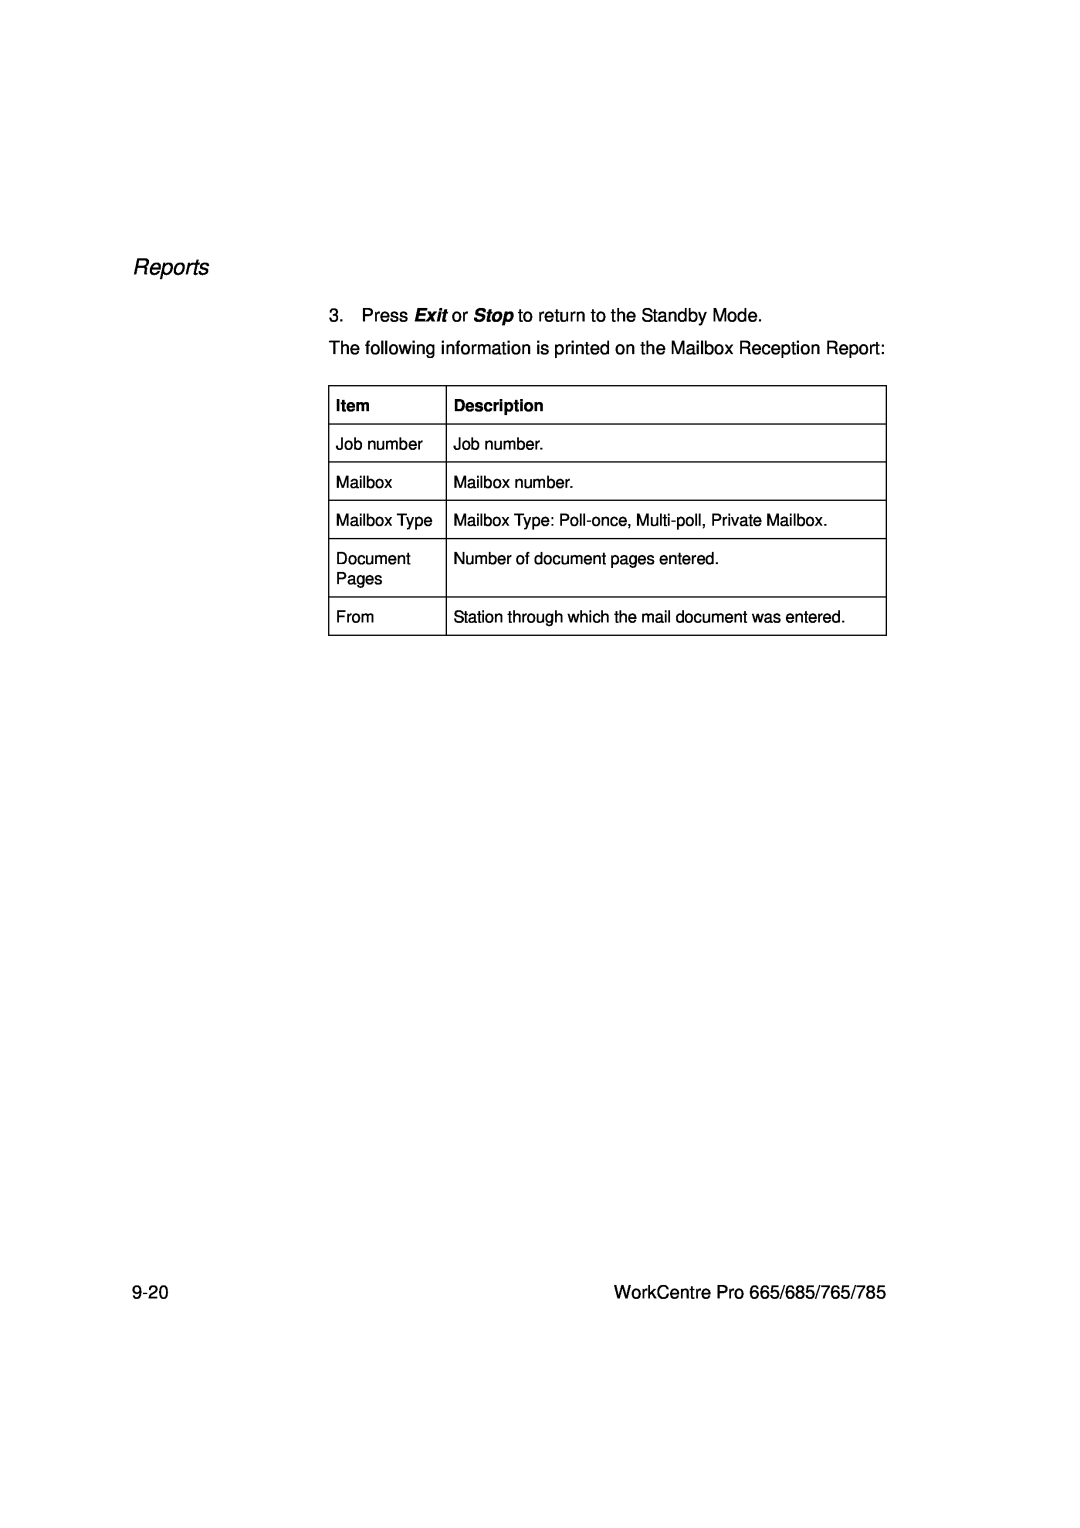 Xerox manual Reports, 9-20, WorkCentre Pro 665/685/765/785, Item, Description 